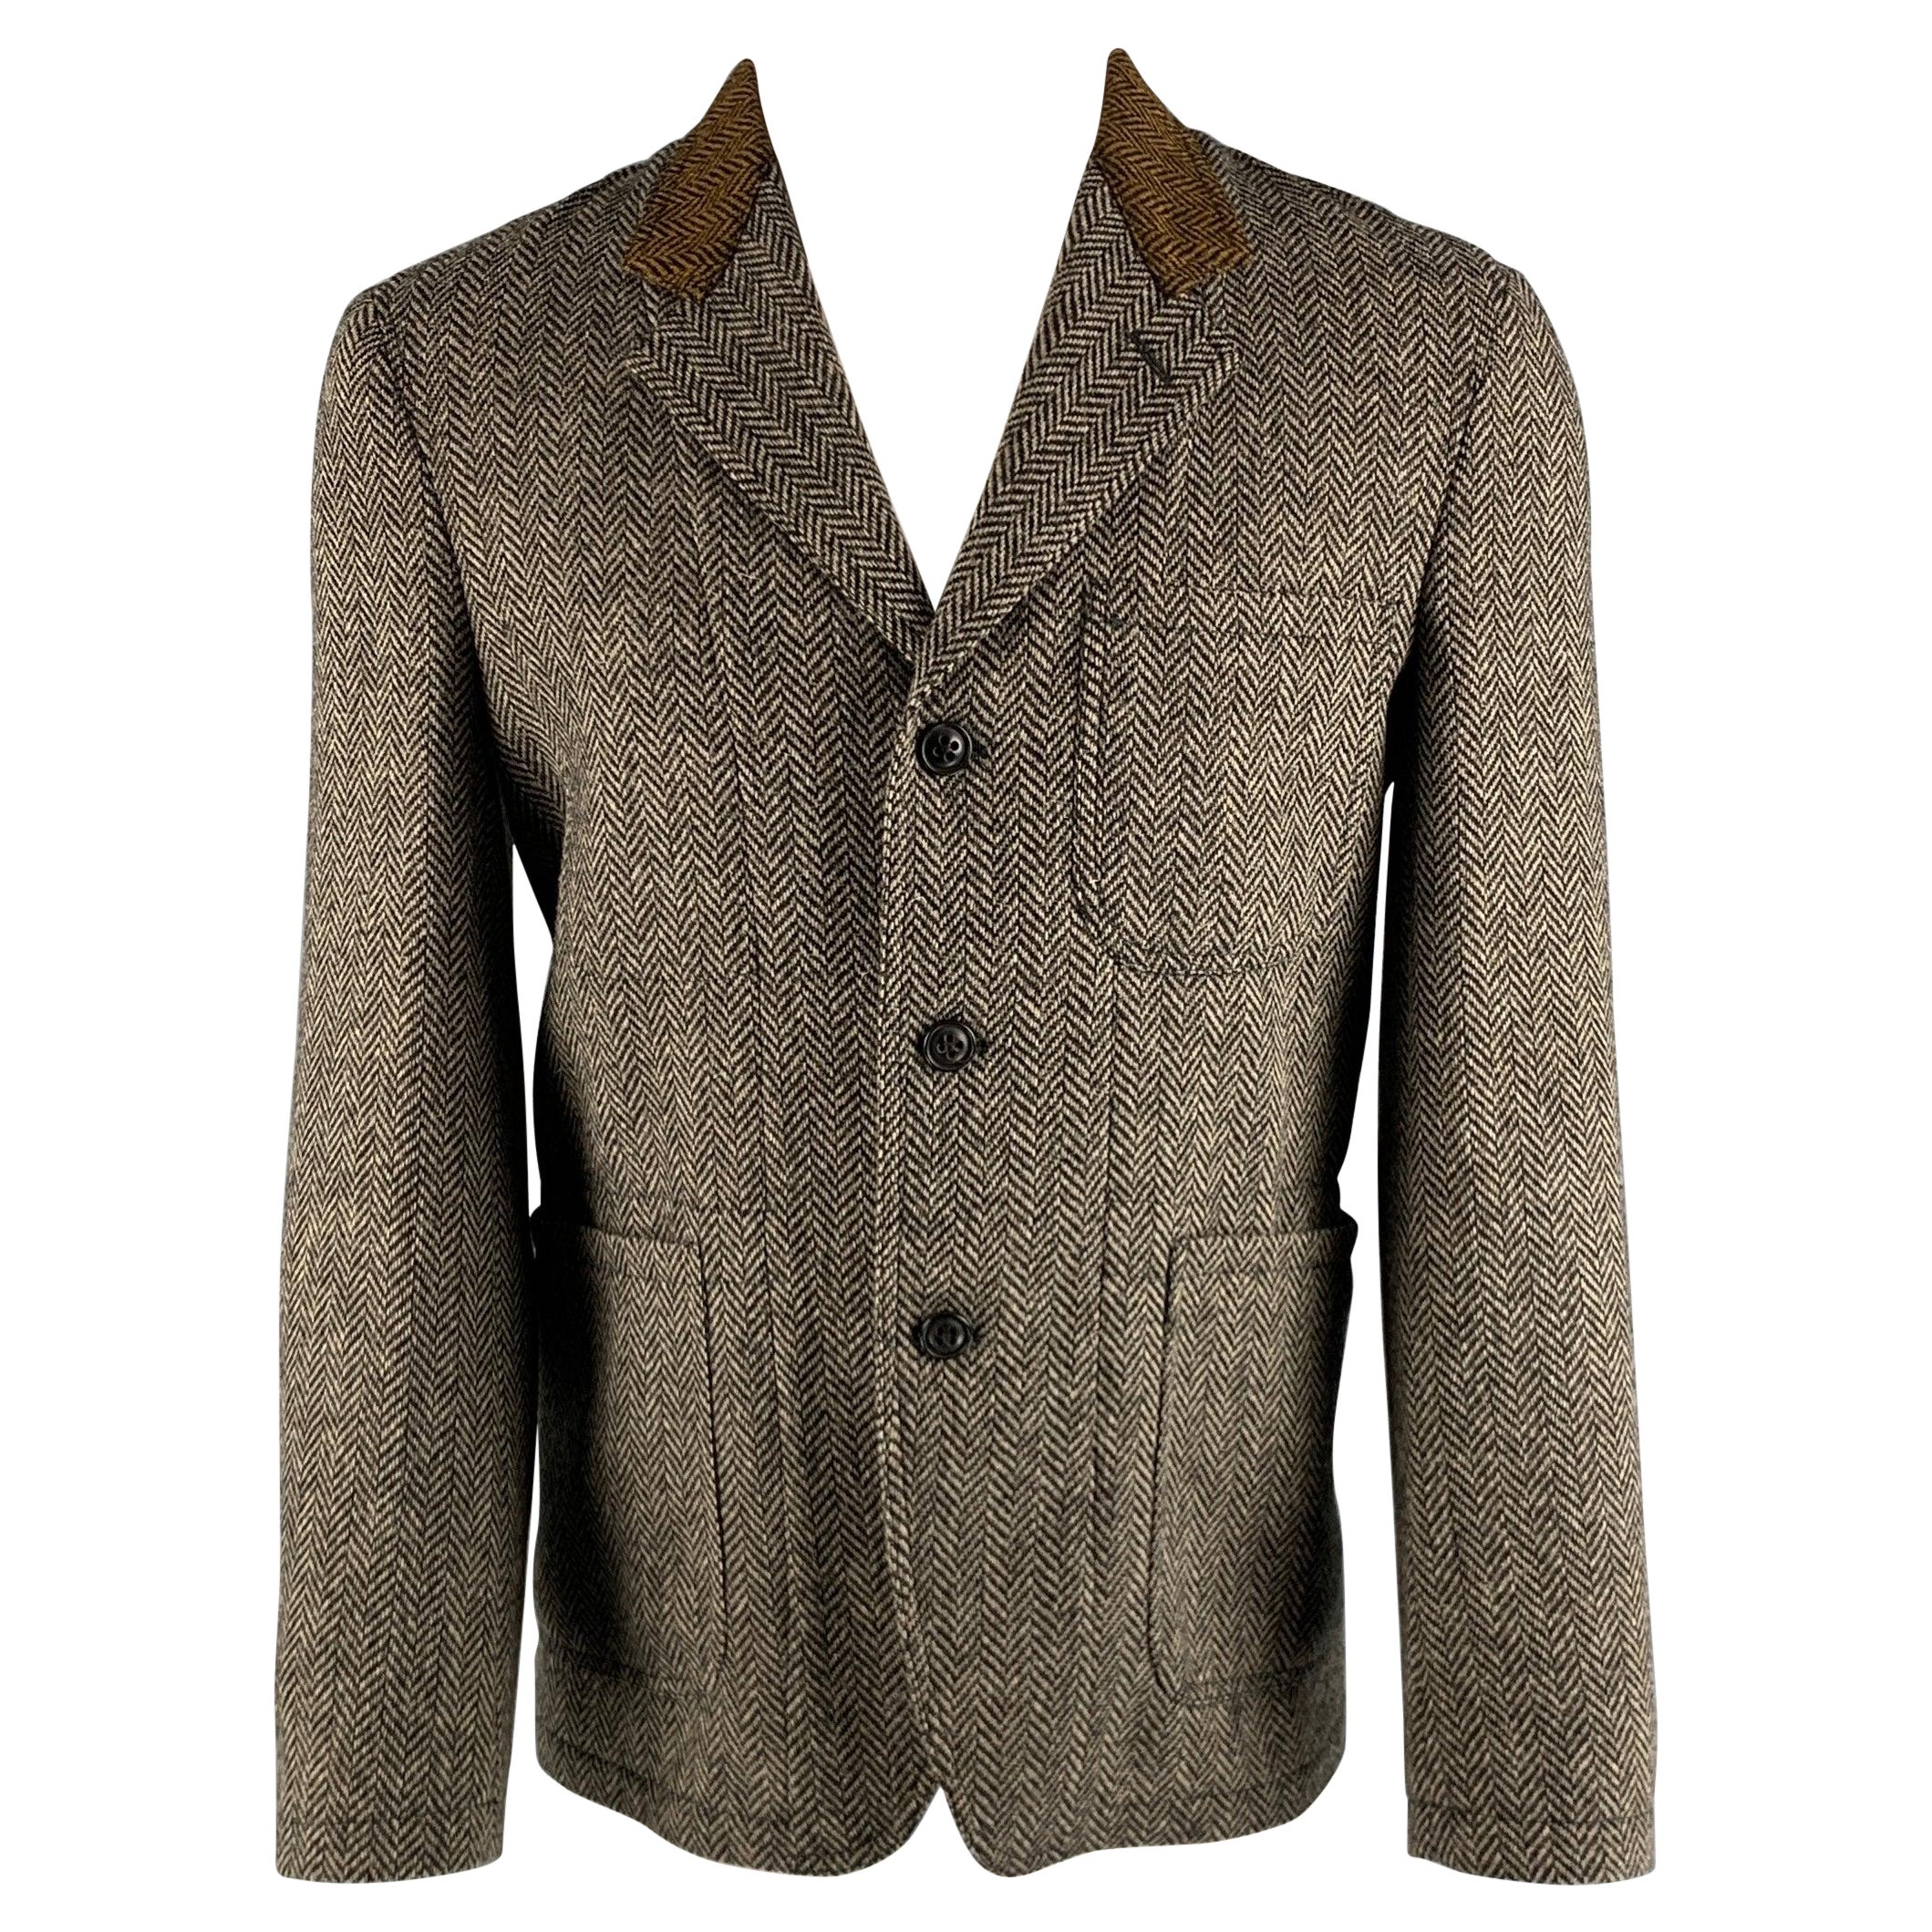 MARC JACOBS Size 38 Grey Black Herringbone Wool Notch Lapel Sport Coat